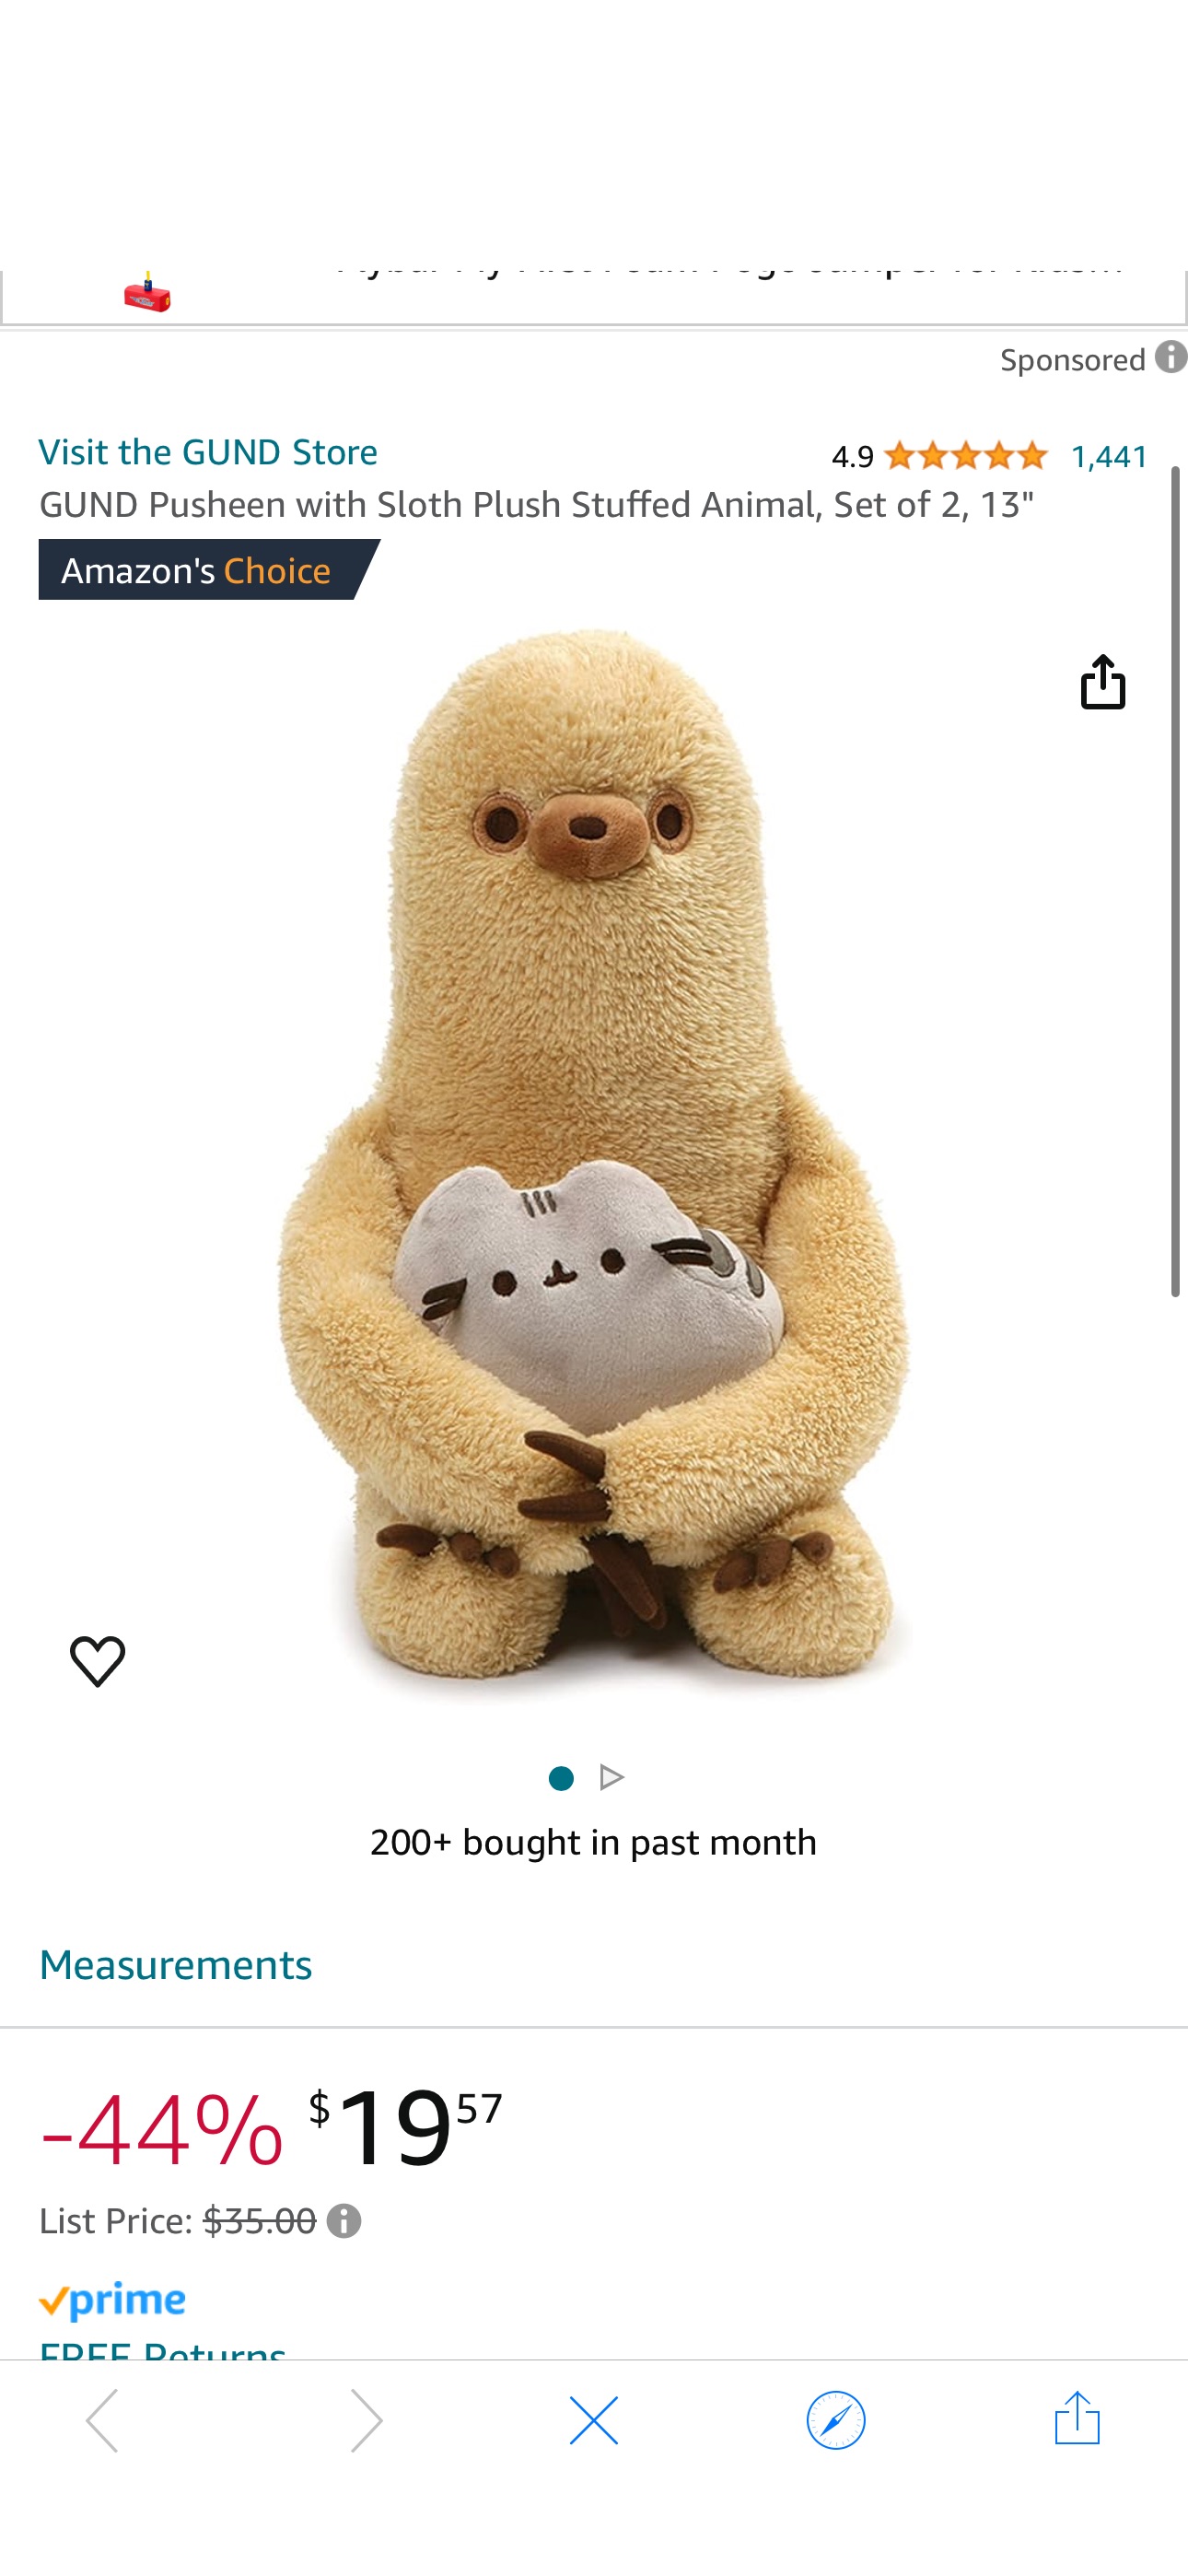 Amazon.com: GUND Pusheen with Sloth Plush Stuffed Animal, Set of 2, 13" : Toys & Games